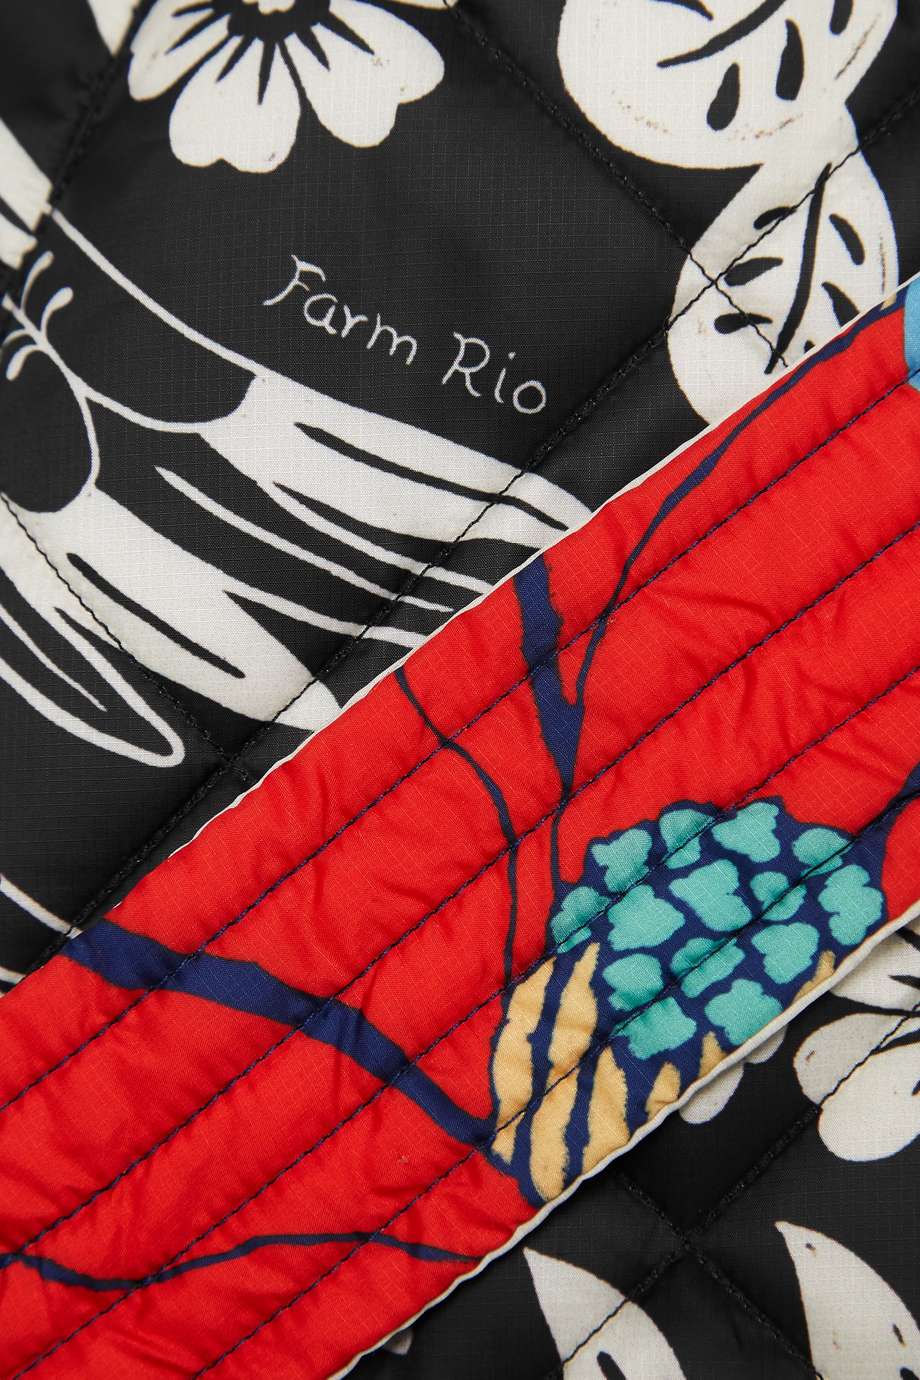 Farm Rio - Floral Graphic Reversible Coat